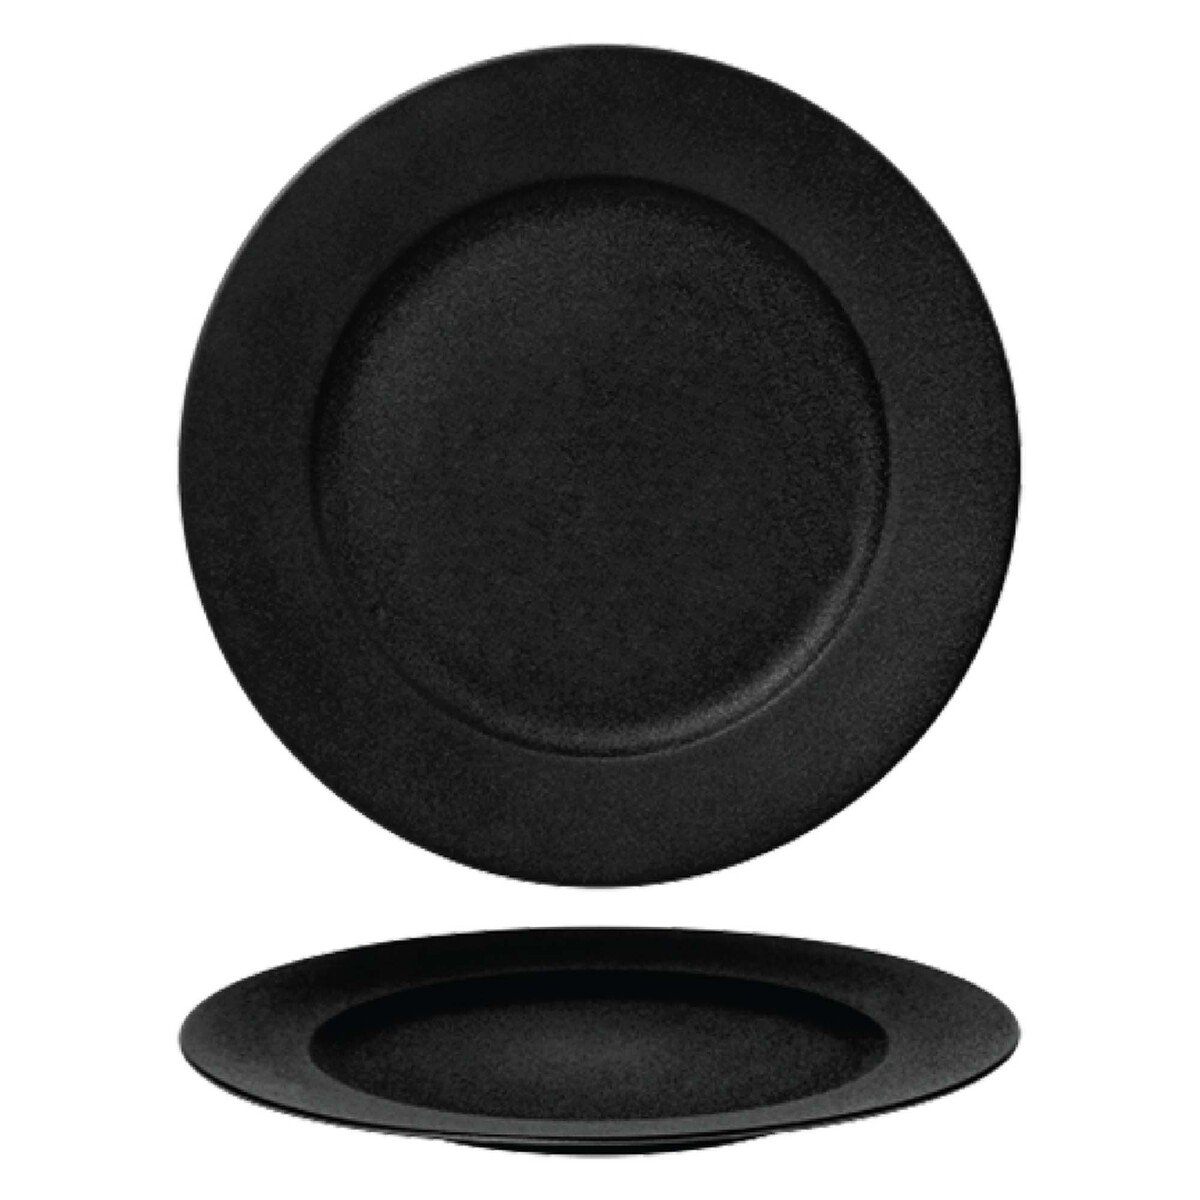 Qualitier Sand Series Flat Plate, Black, 27cm, 5051A